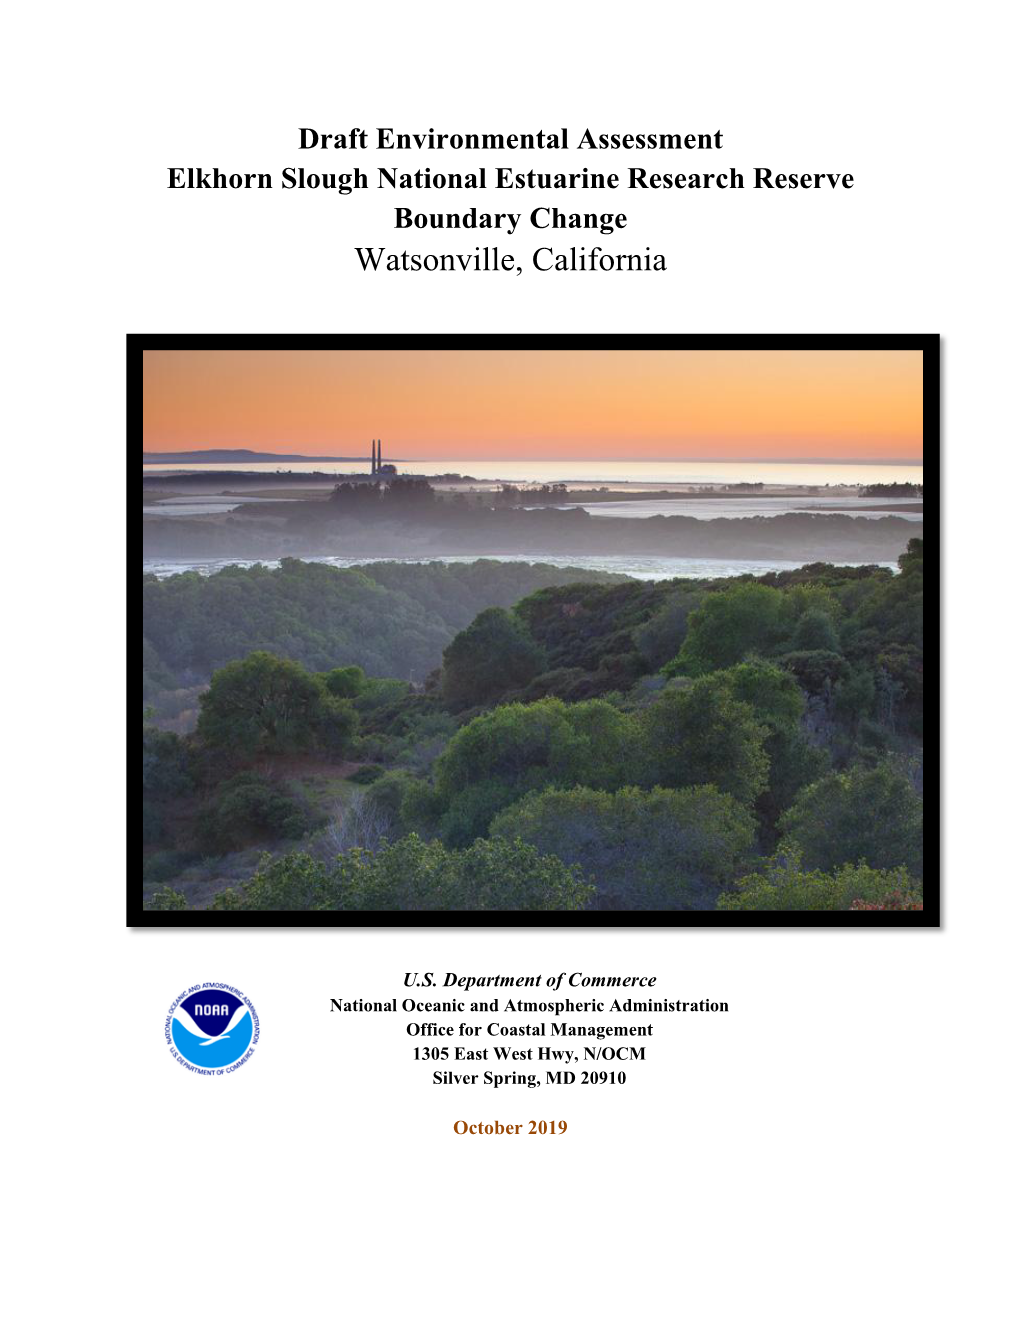 Elkhorn Slough Estuarine Research Reserve Boundary Change